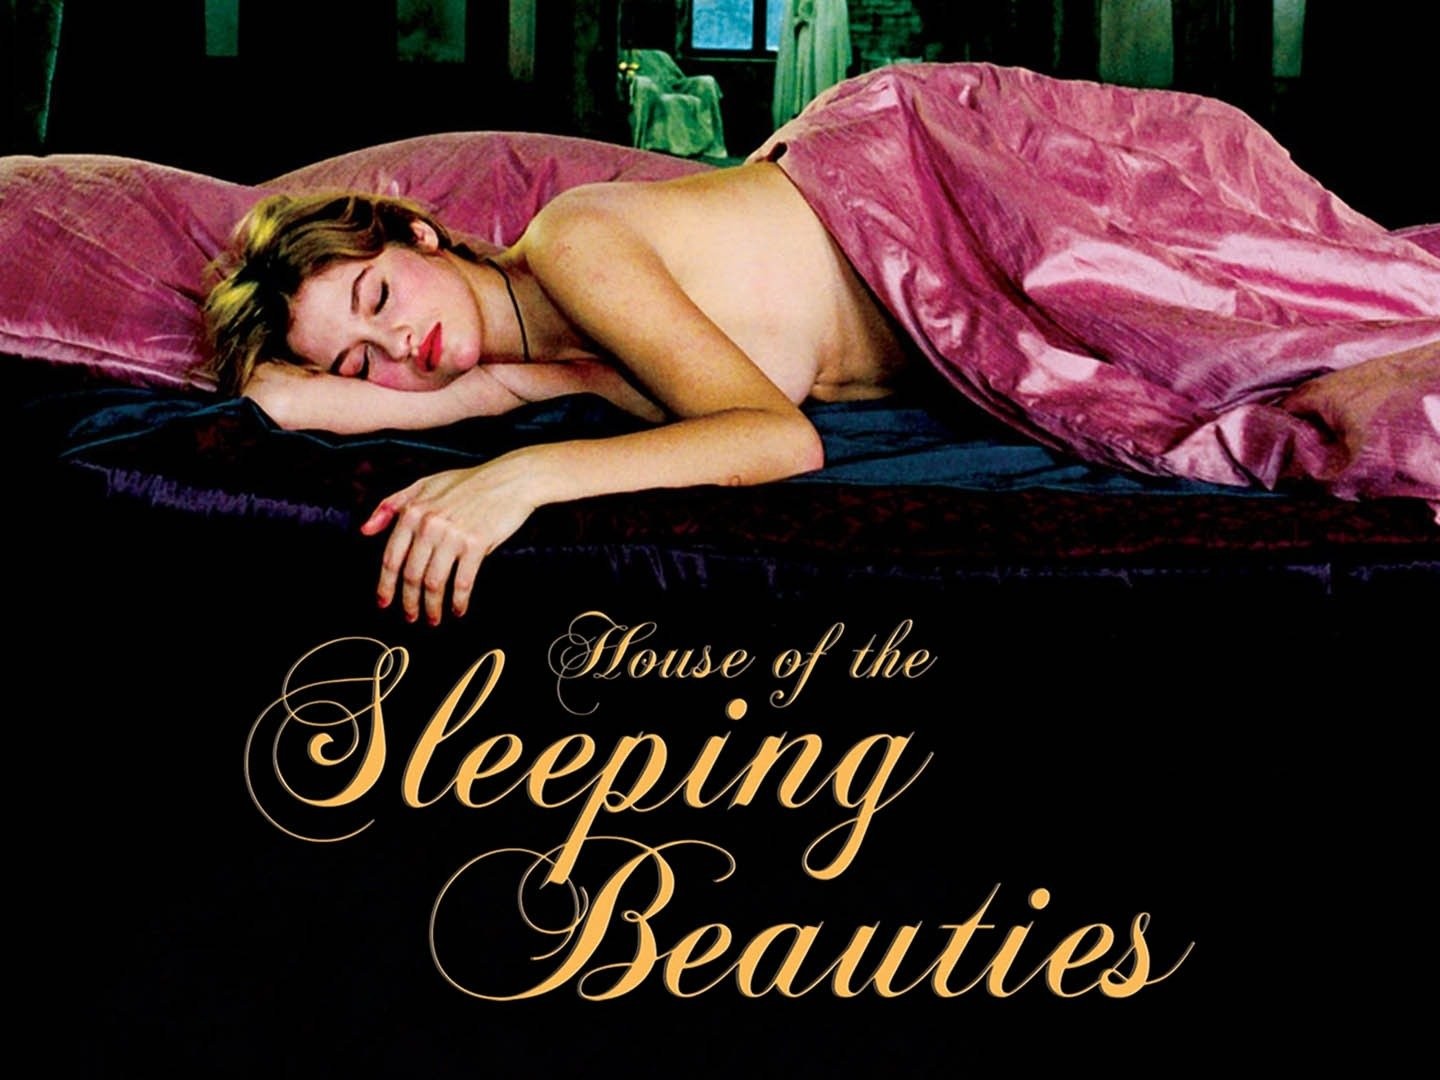 Sleeping Beauty - Rotten Tomatoes